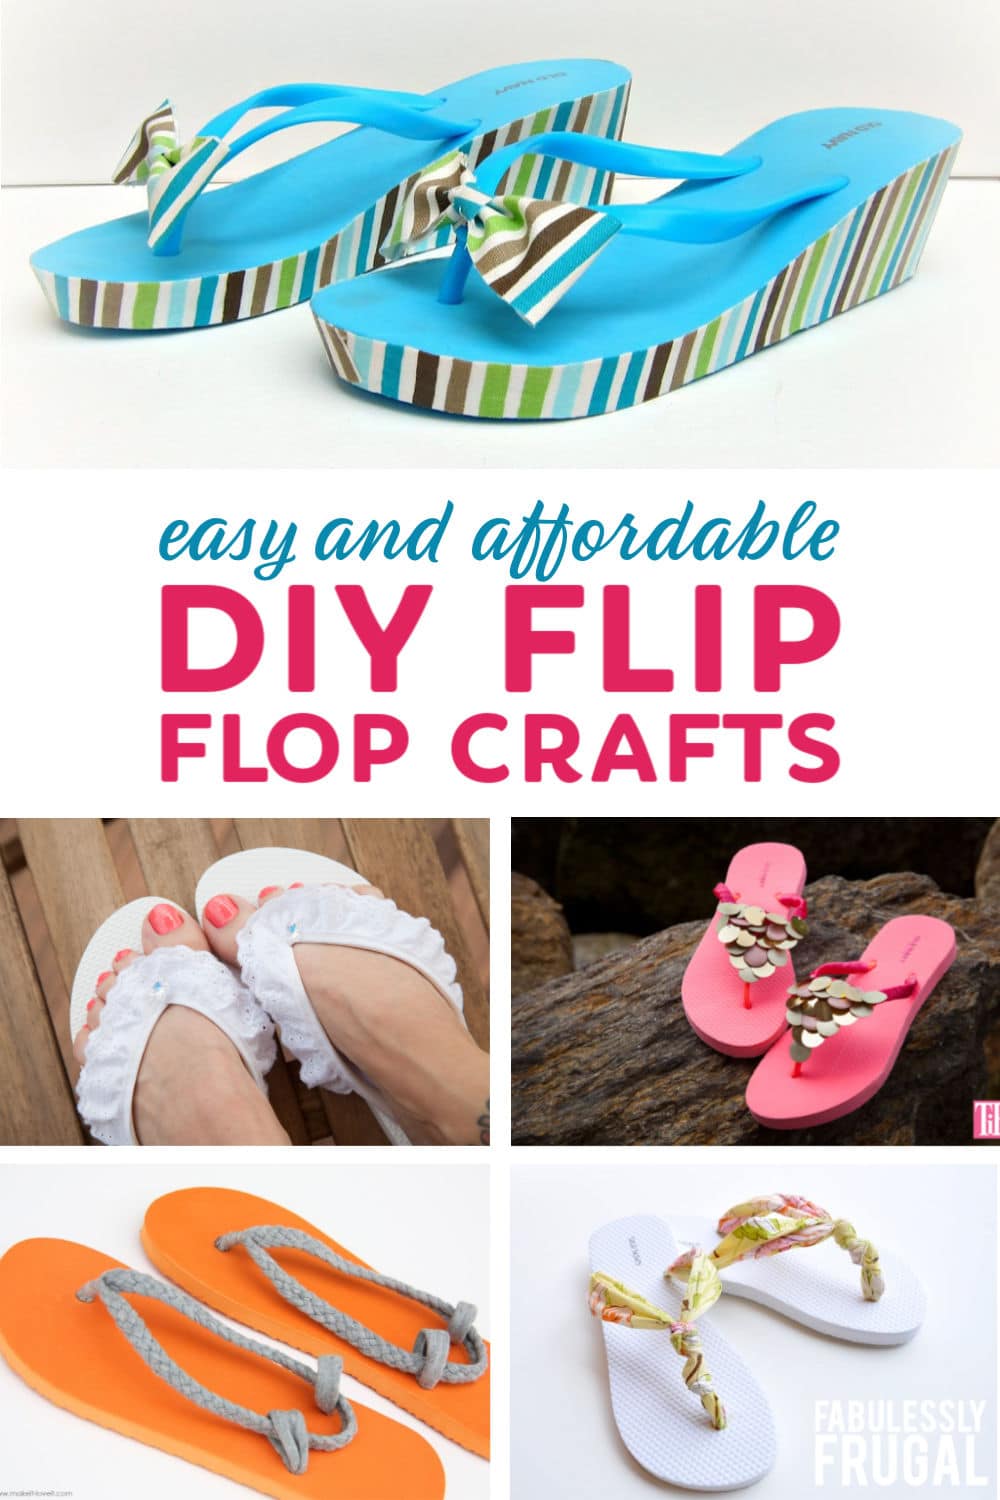 DIY flip flop crafts